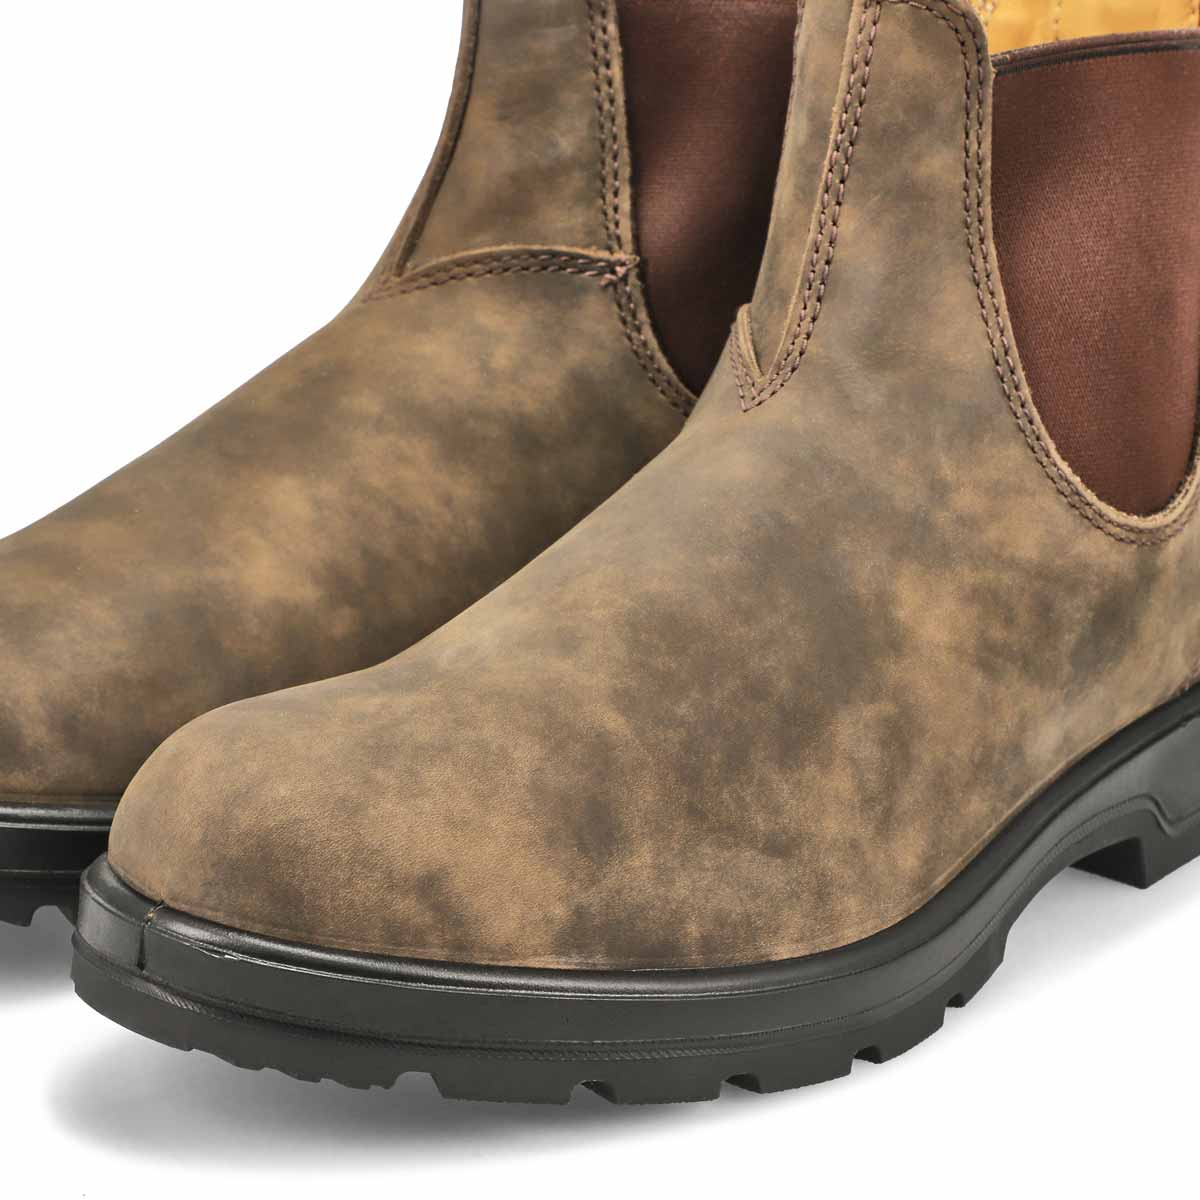 Unisex The Winter Waterproof Boot - Brown